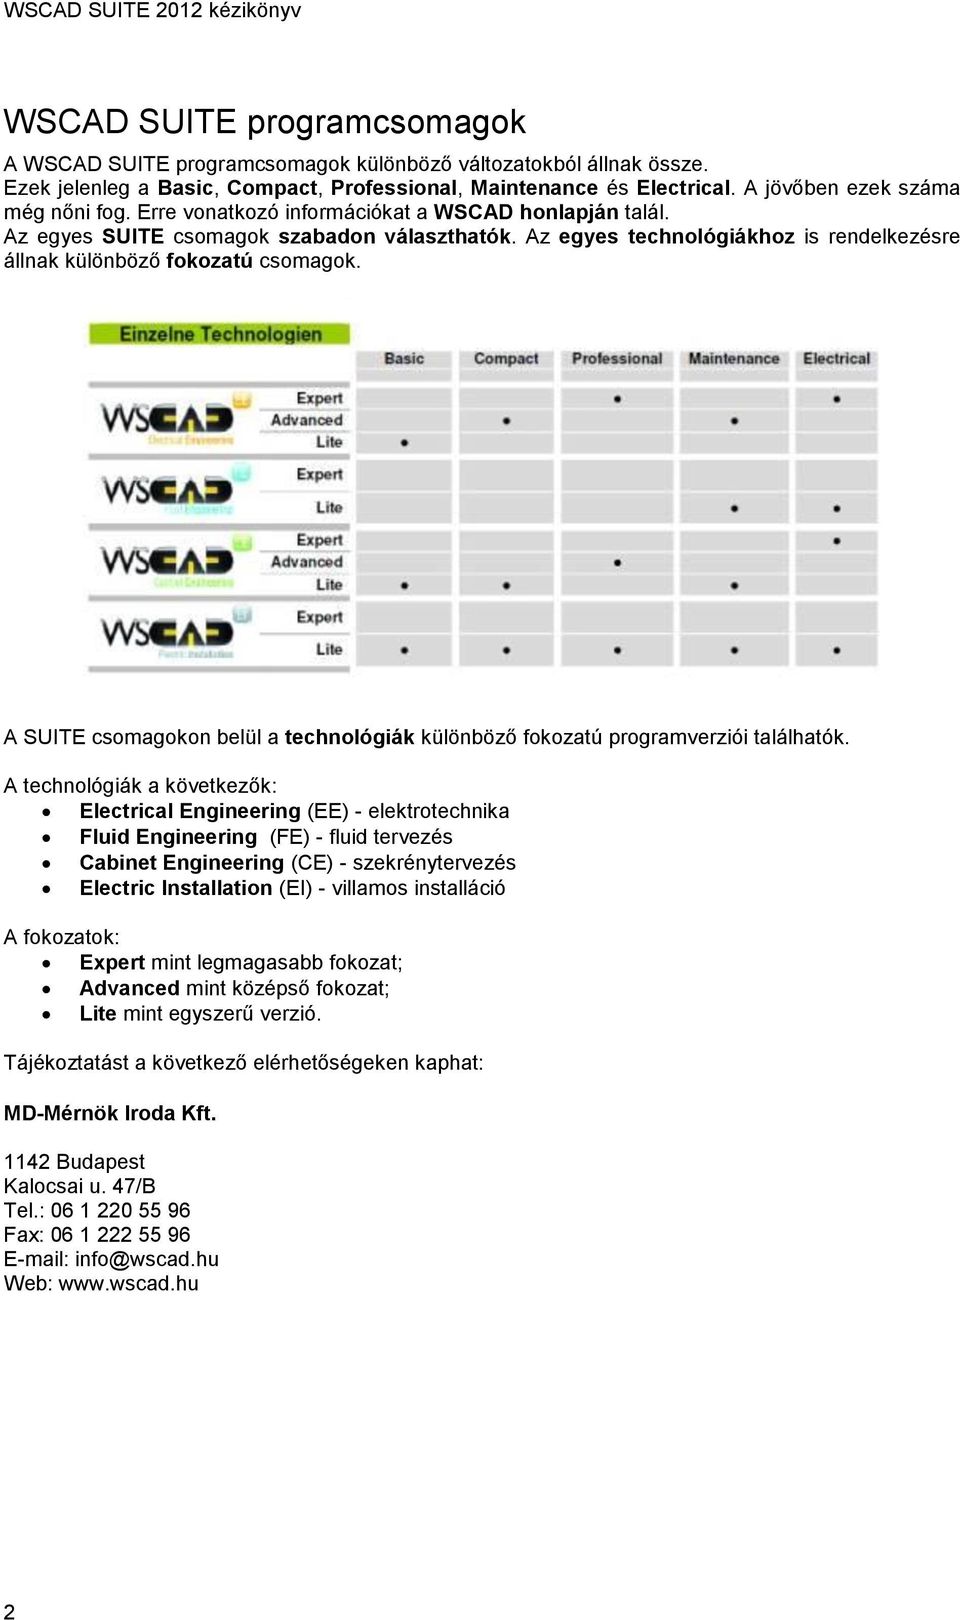 WSCAD SUITE 2012 kézikönyv - PDF Free Download